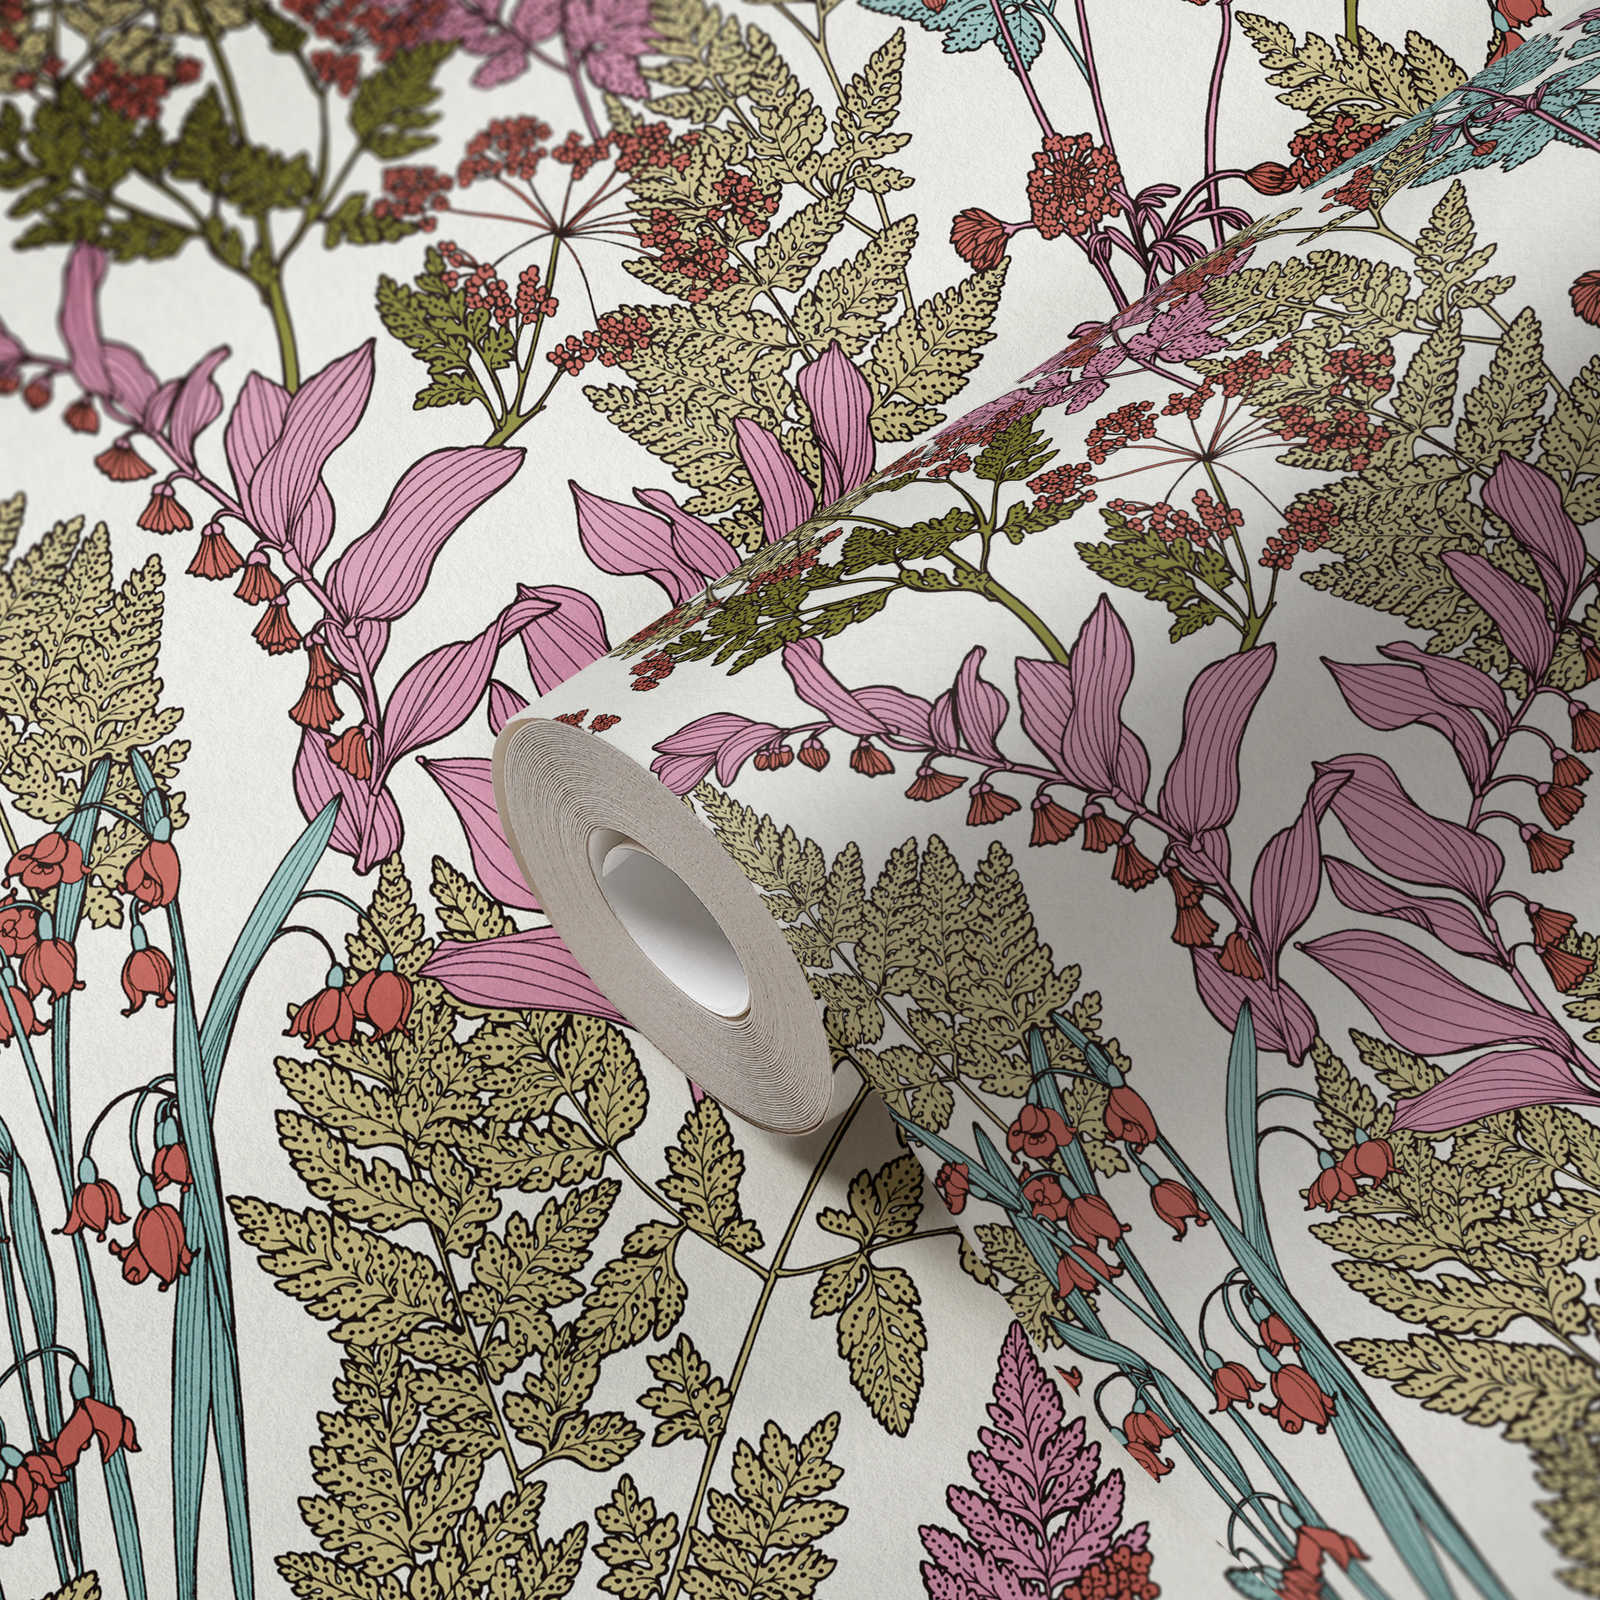             Tapete Blätter & Blumen Design im modern Botanical Stil – Bunt, Grün, Blau
        